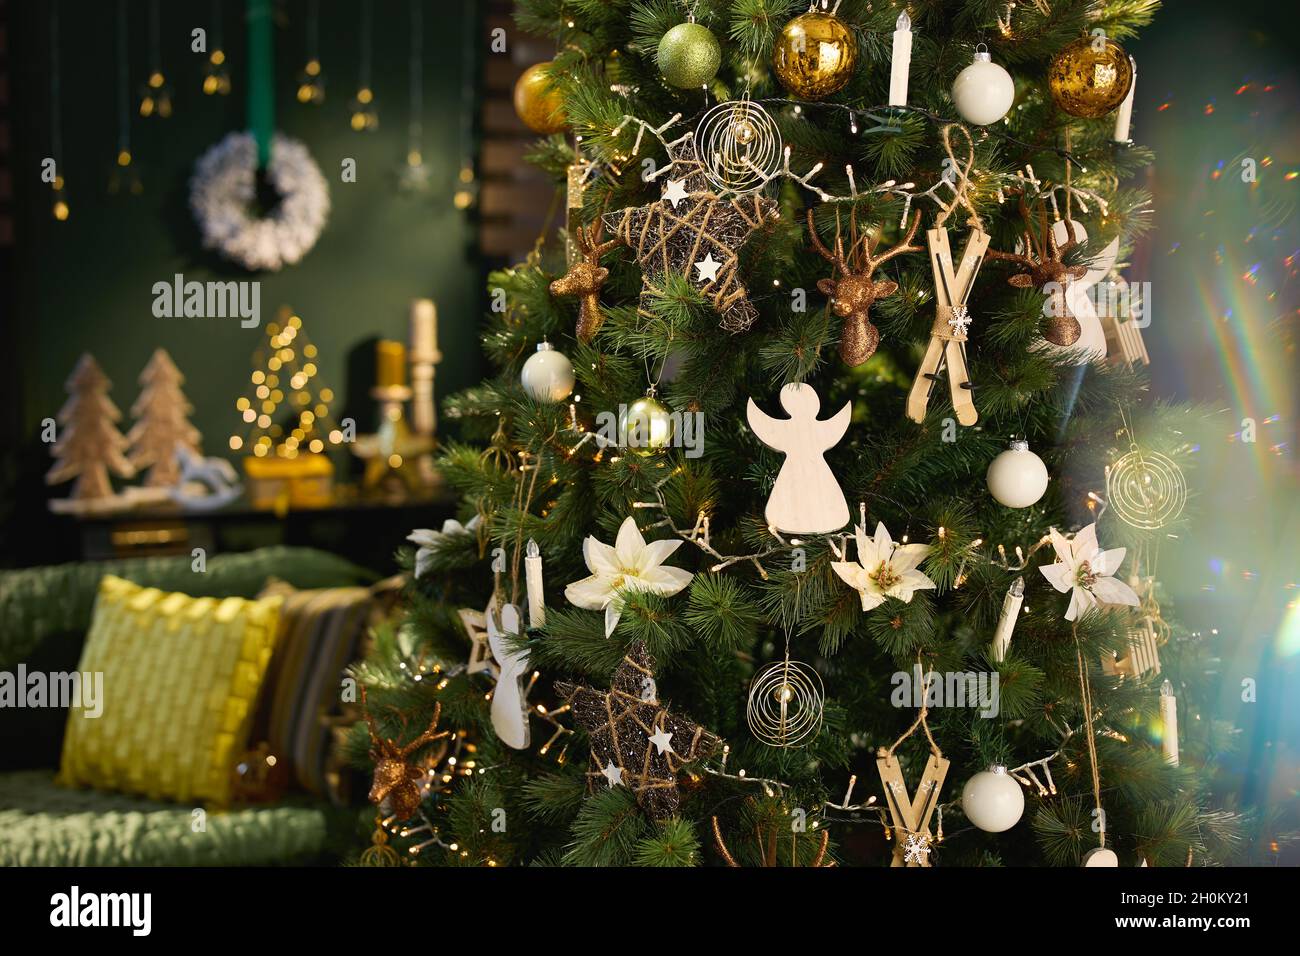 Christmas decorated green modern home with big Christmas tree. Stock Photo